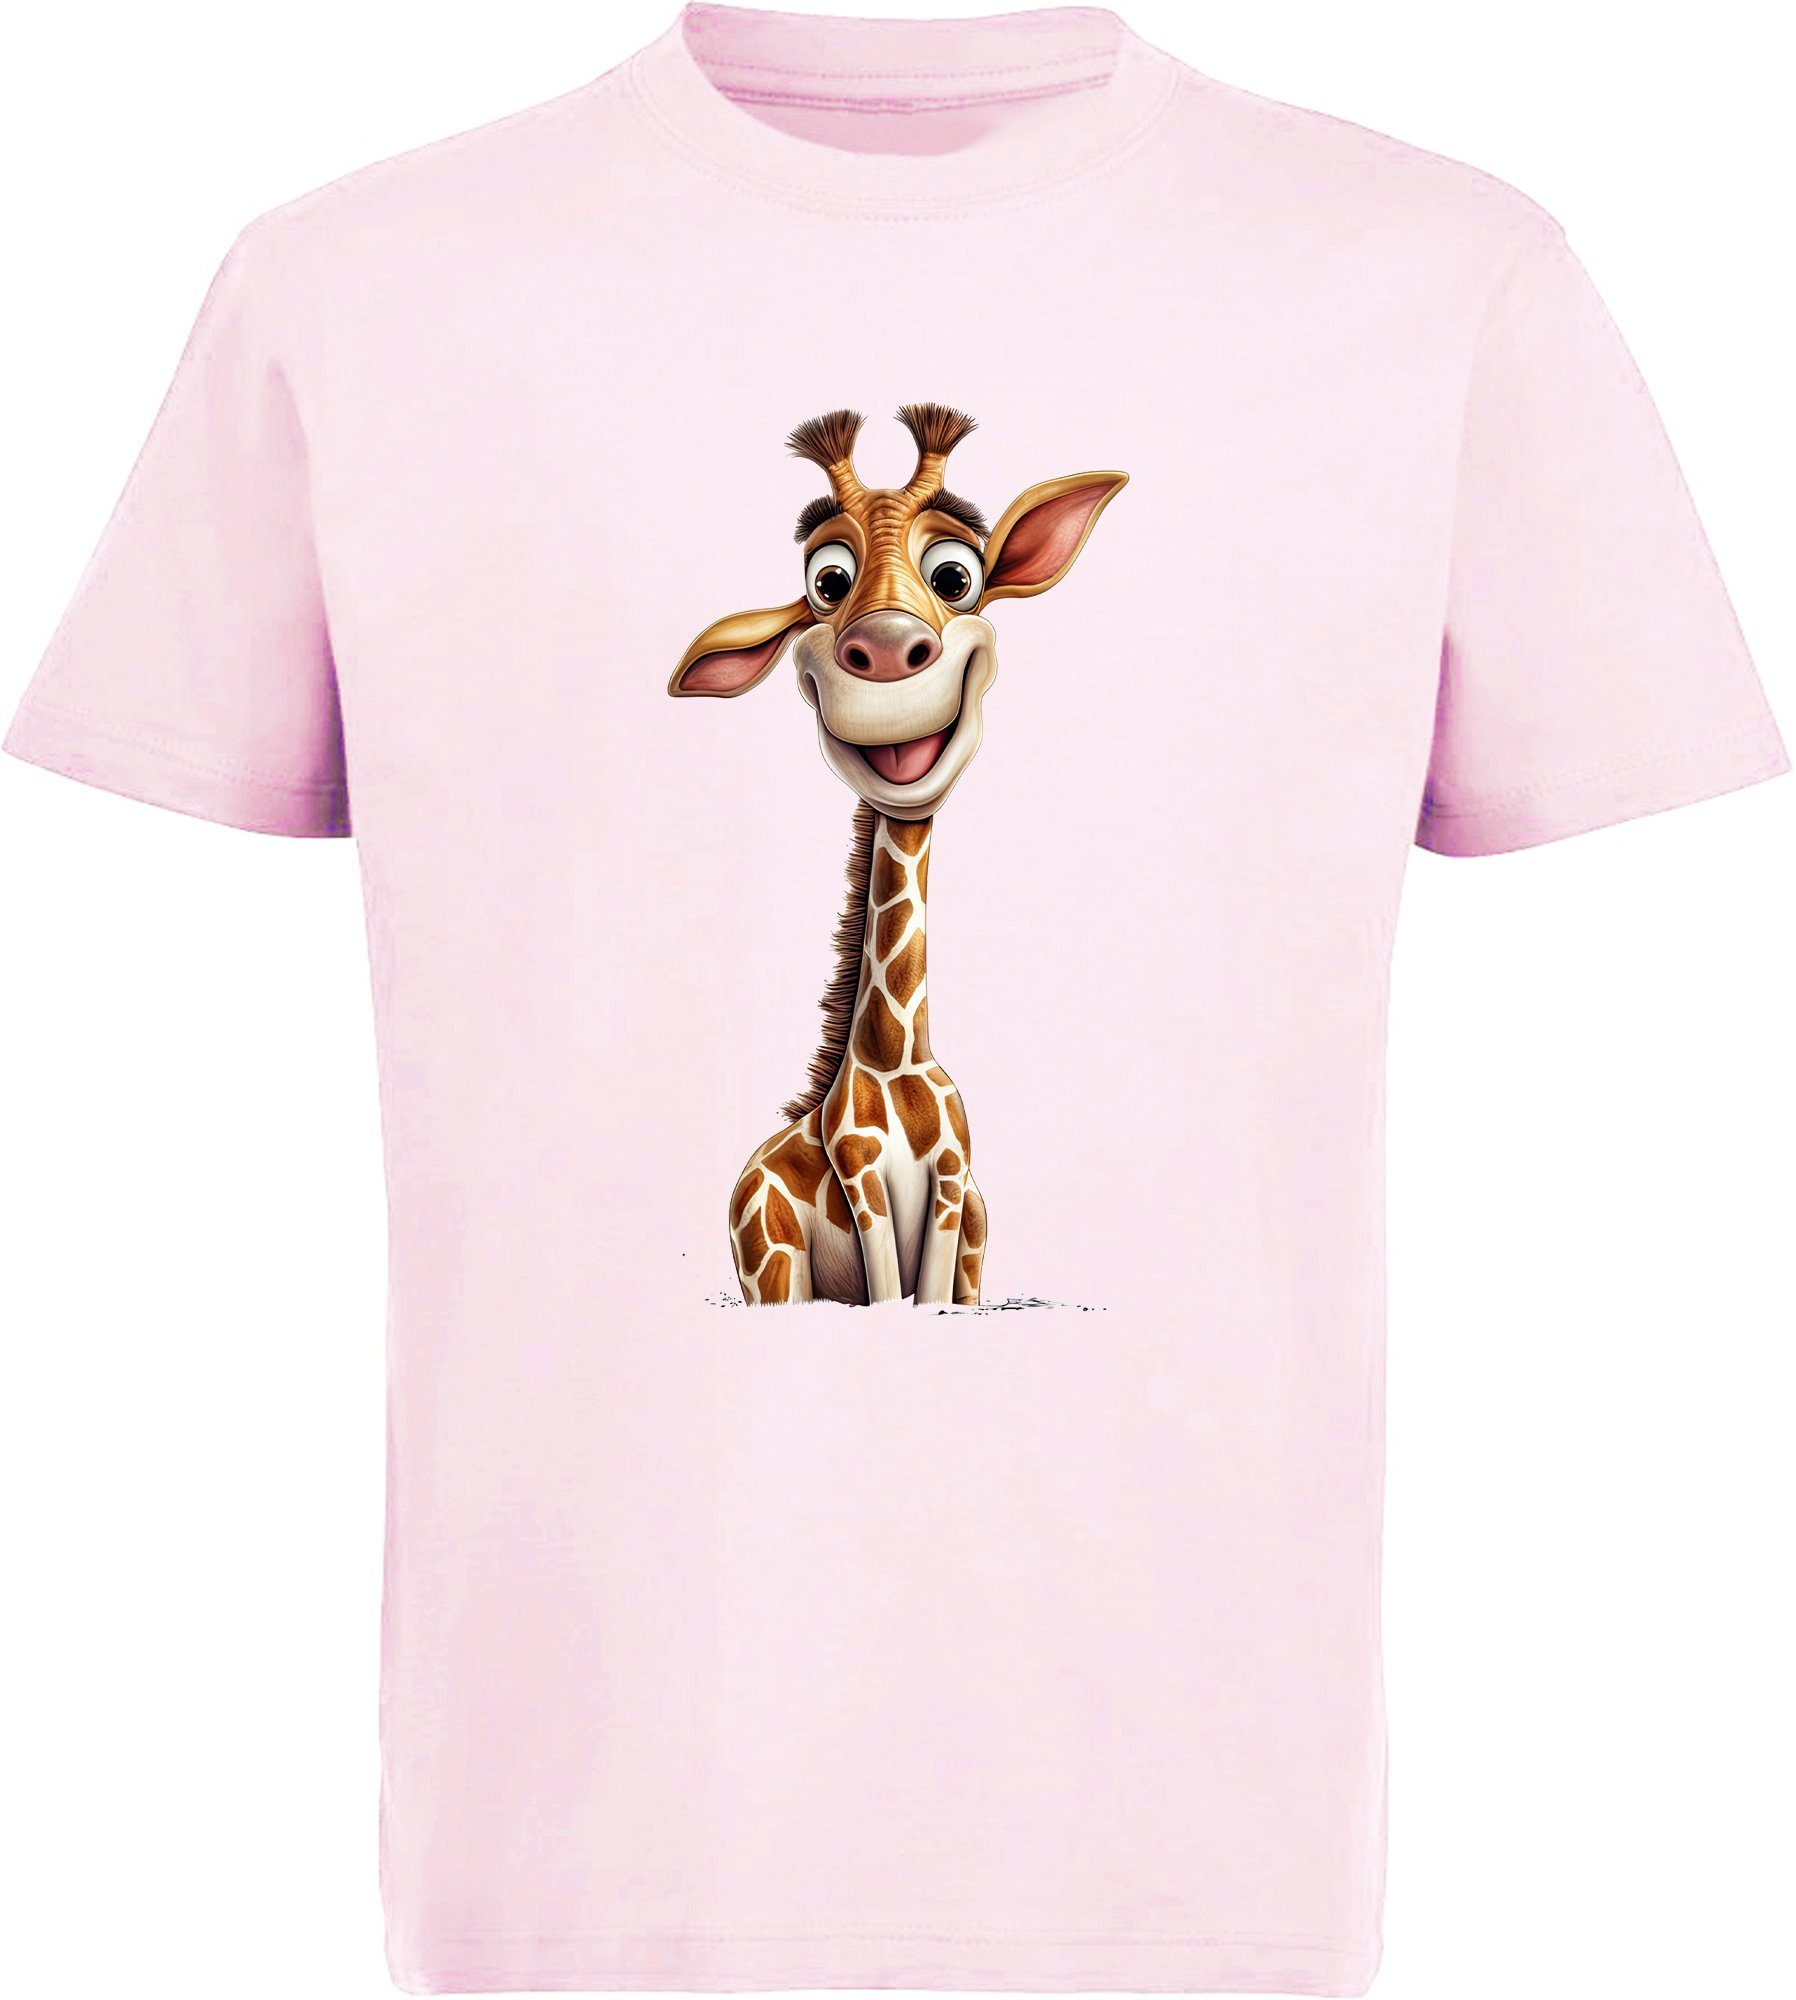 MyDesign24 T-Shirt Kinder Wildtier Print Shirt bedruckt - Baby Giraffe Baumwollshirt mit Aufdruck, i273 rosa